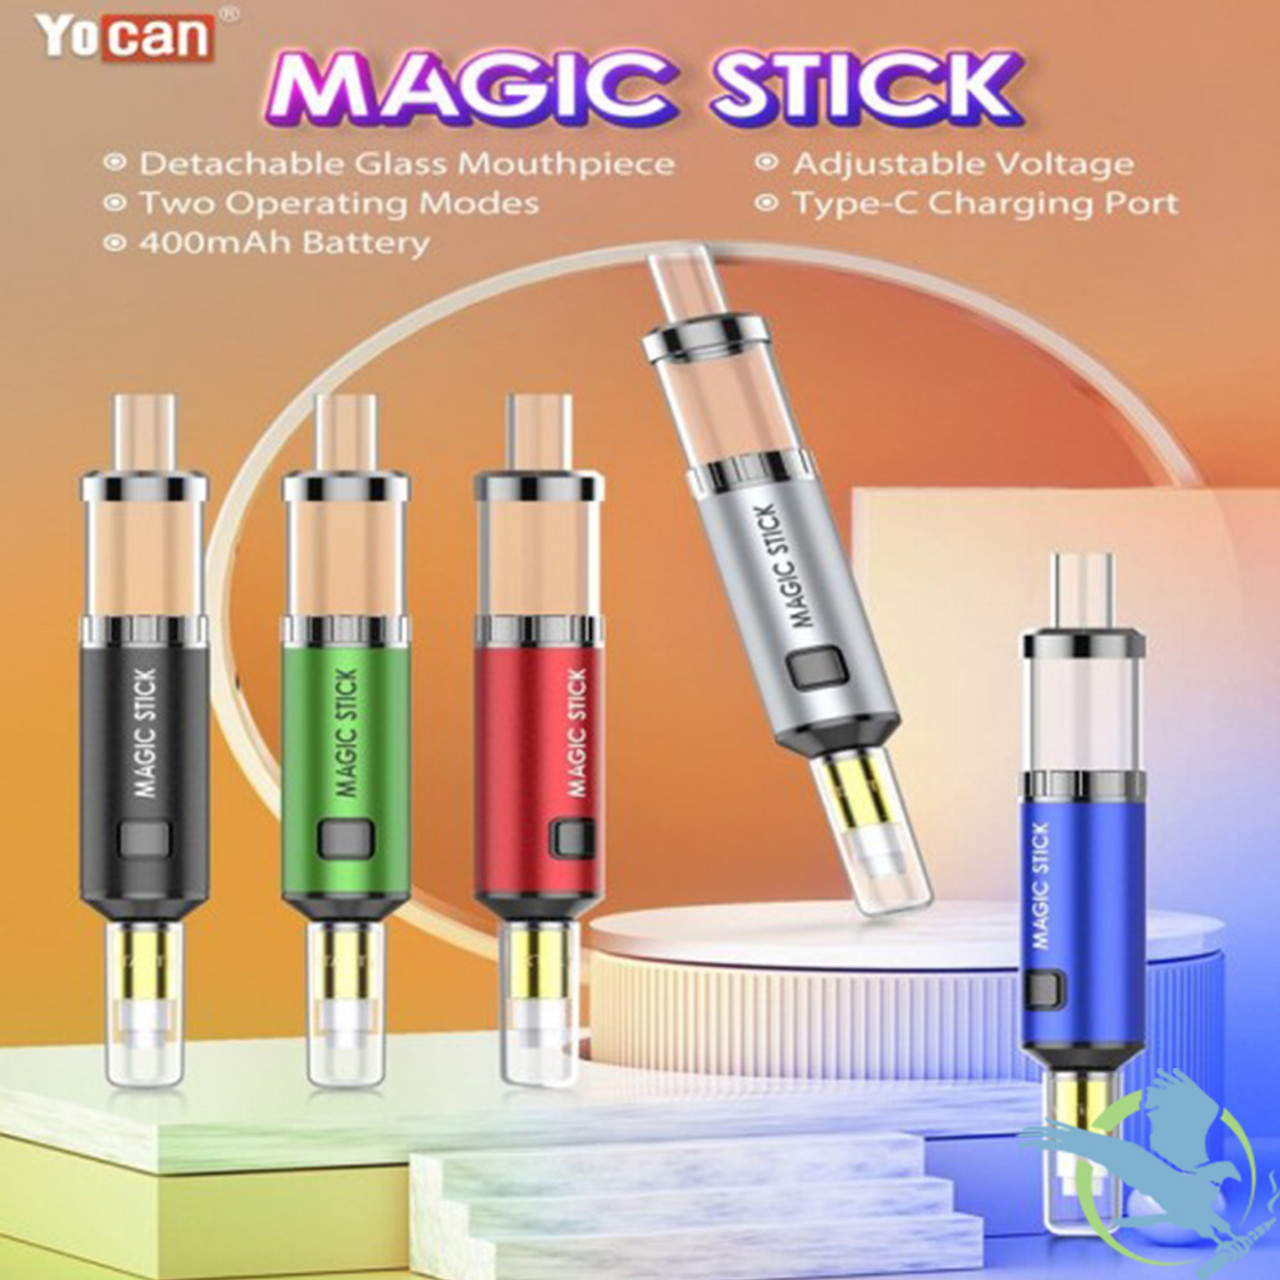 Yocan Magic Stick